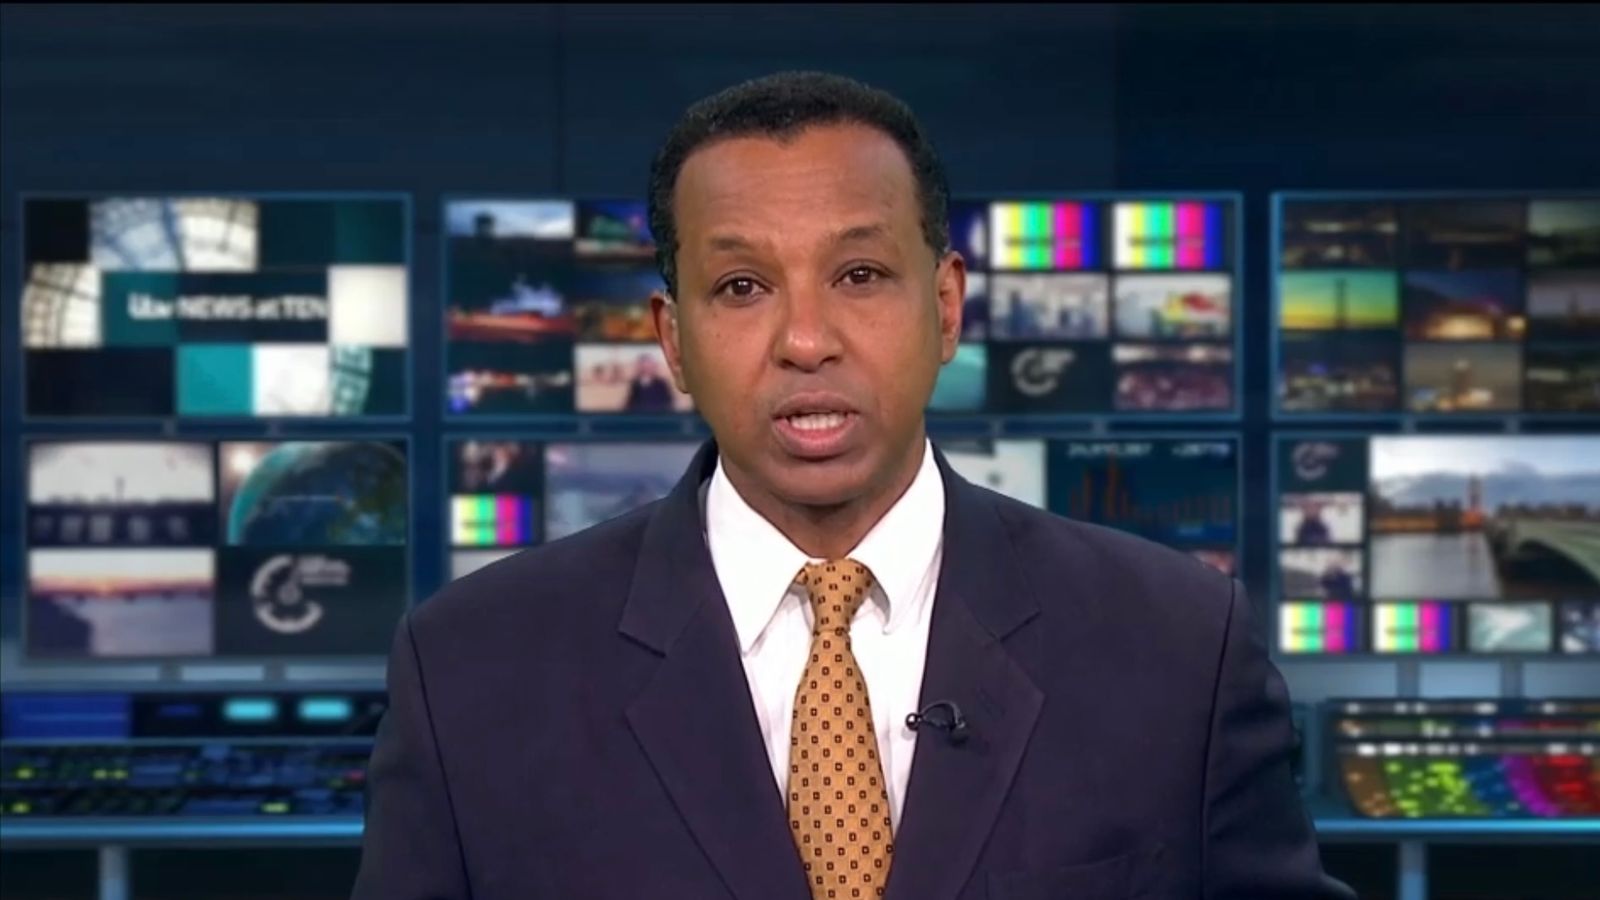 ITV newsreader Rageh Omaar 'receiving medical care' after on-screen behaviour worries fans